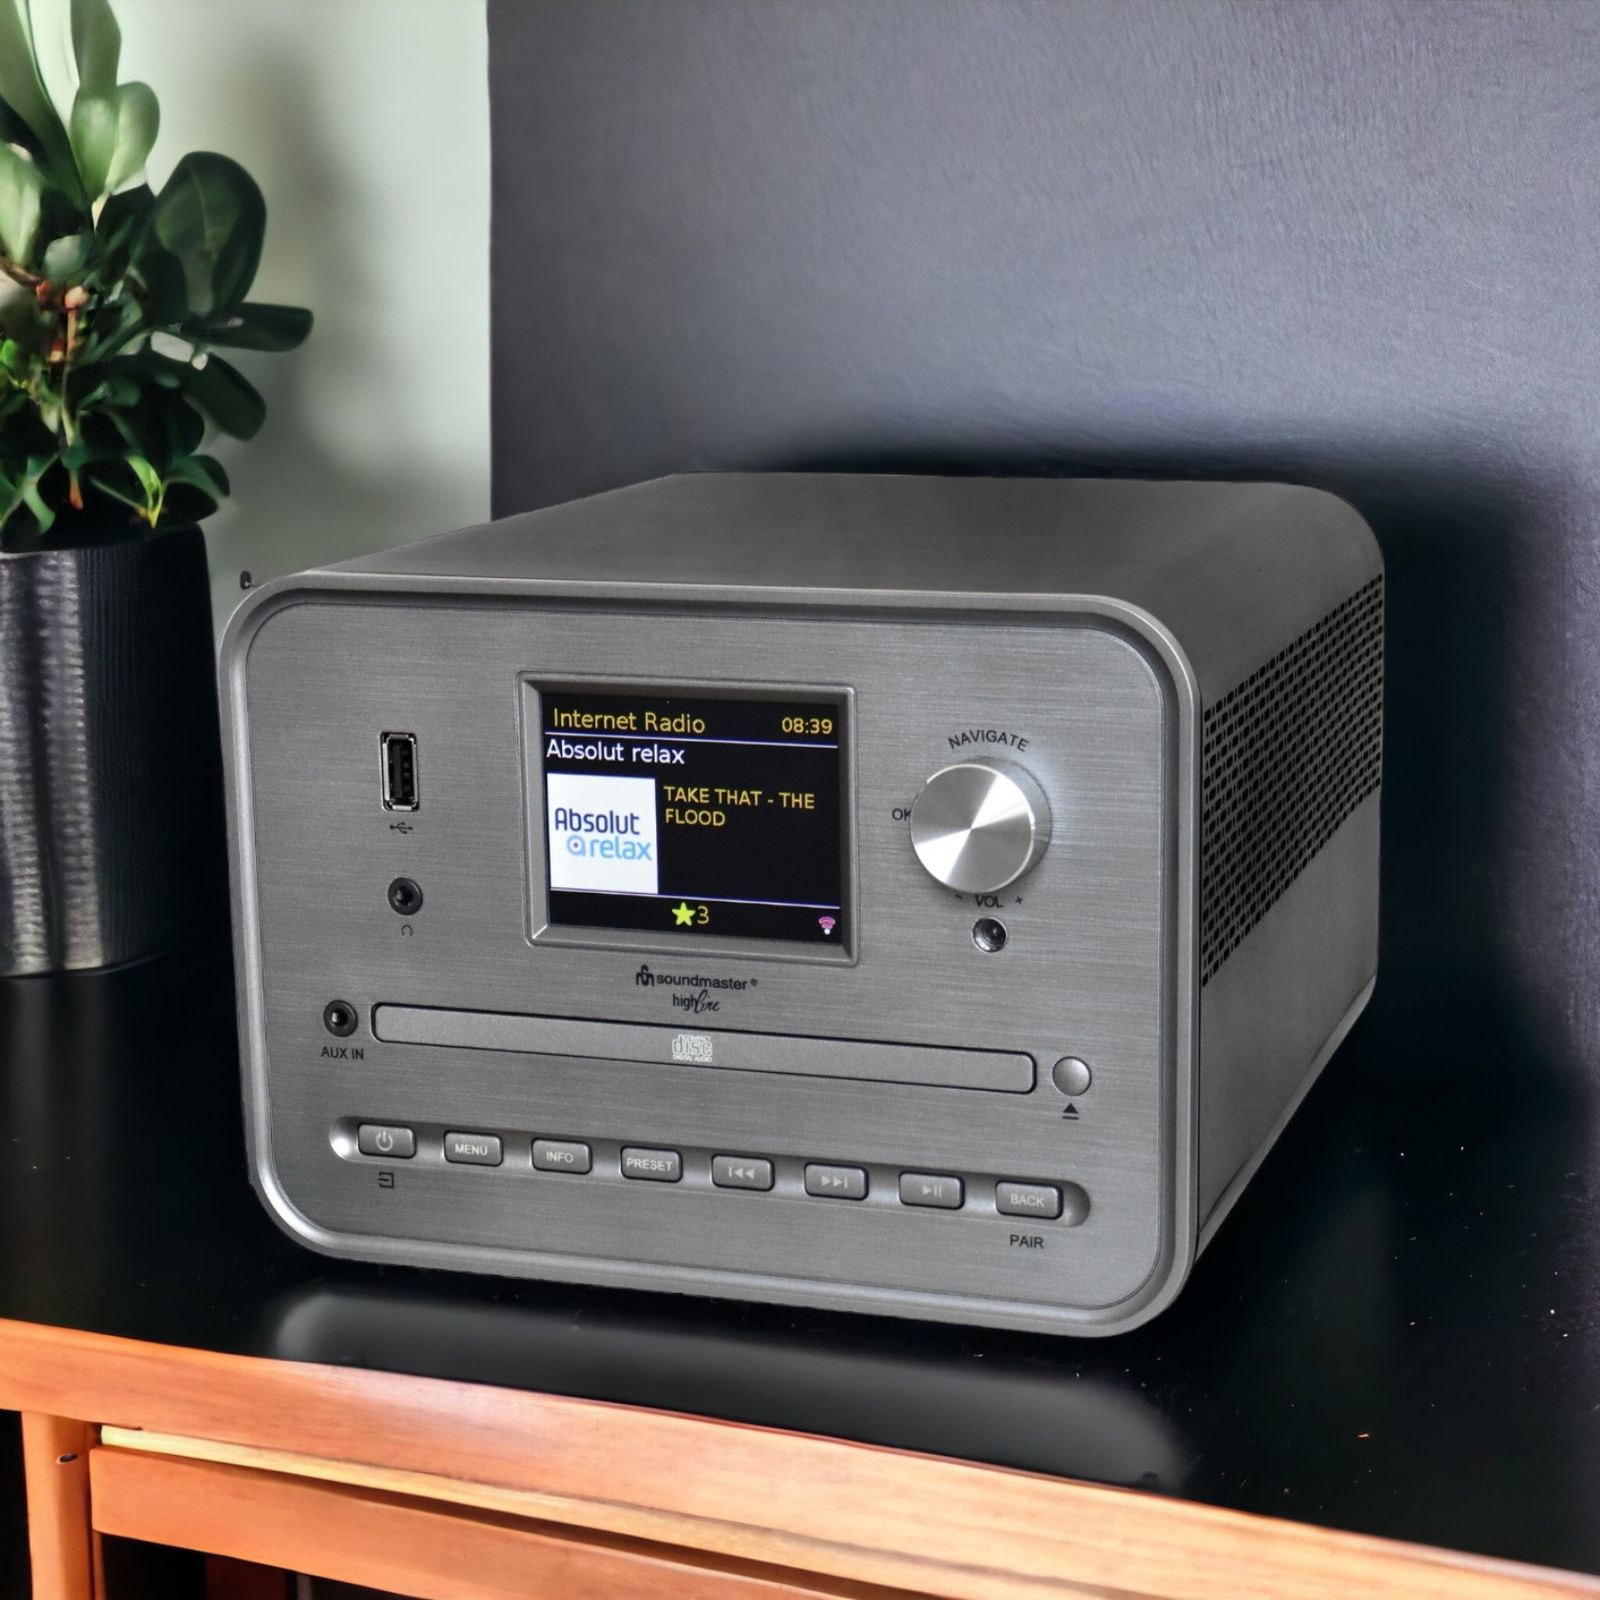 Soundmaster HighLine ICD1050SW Internetradio Kompaktanlage CD-Player Stereo WLAN 2,4/5 GHz DAB+ Bluetooth USB MP3 APP Farbdisplay Wecker